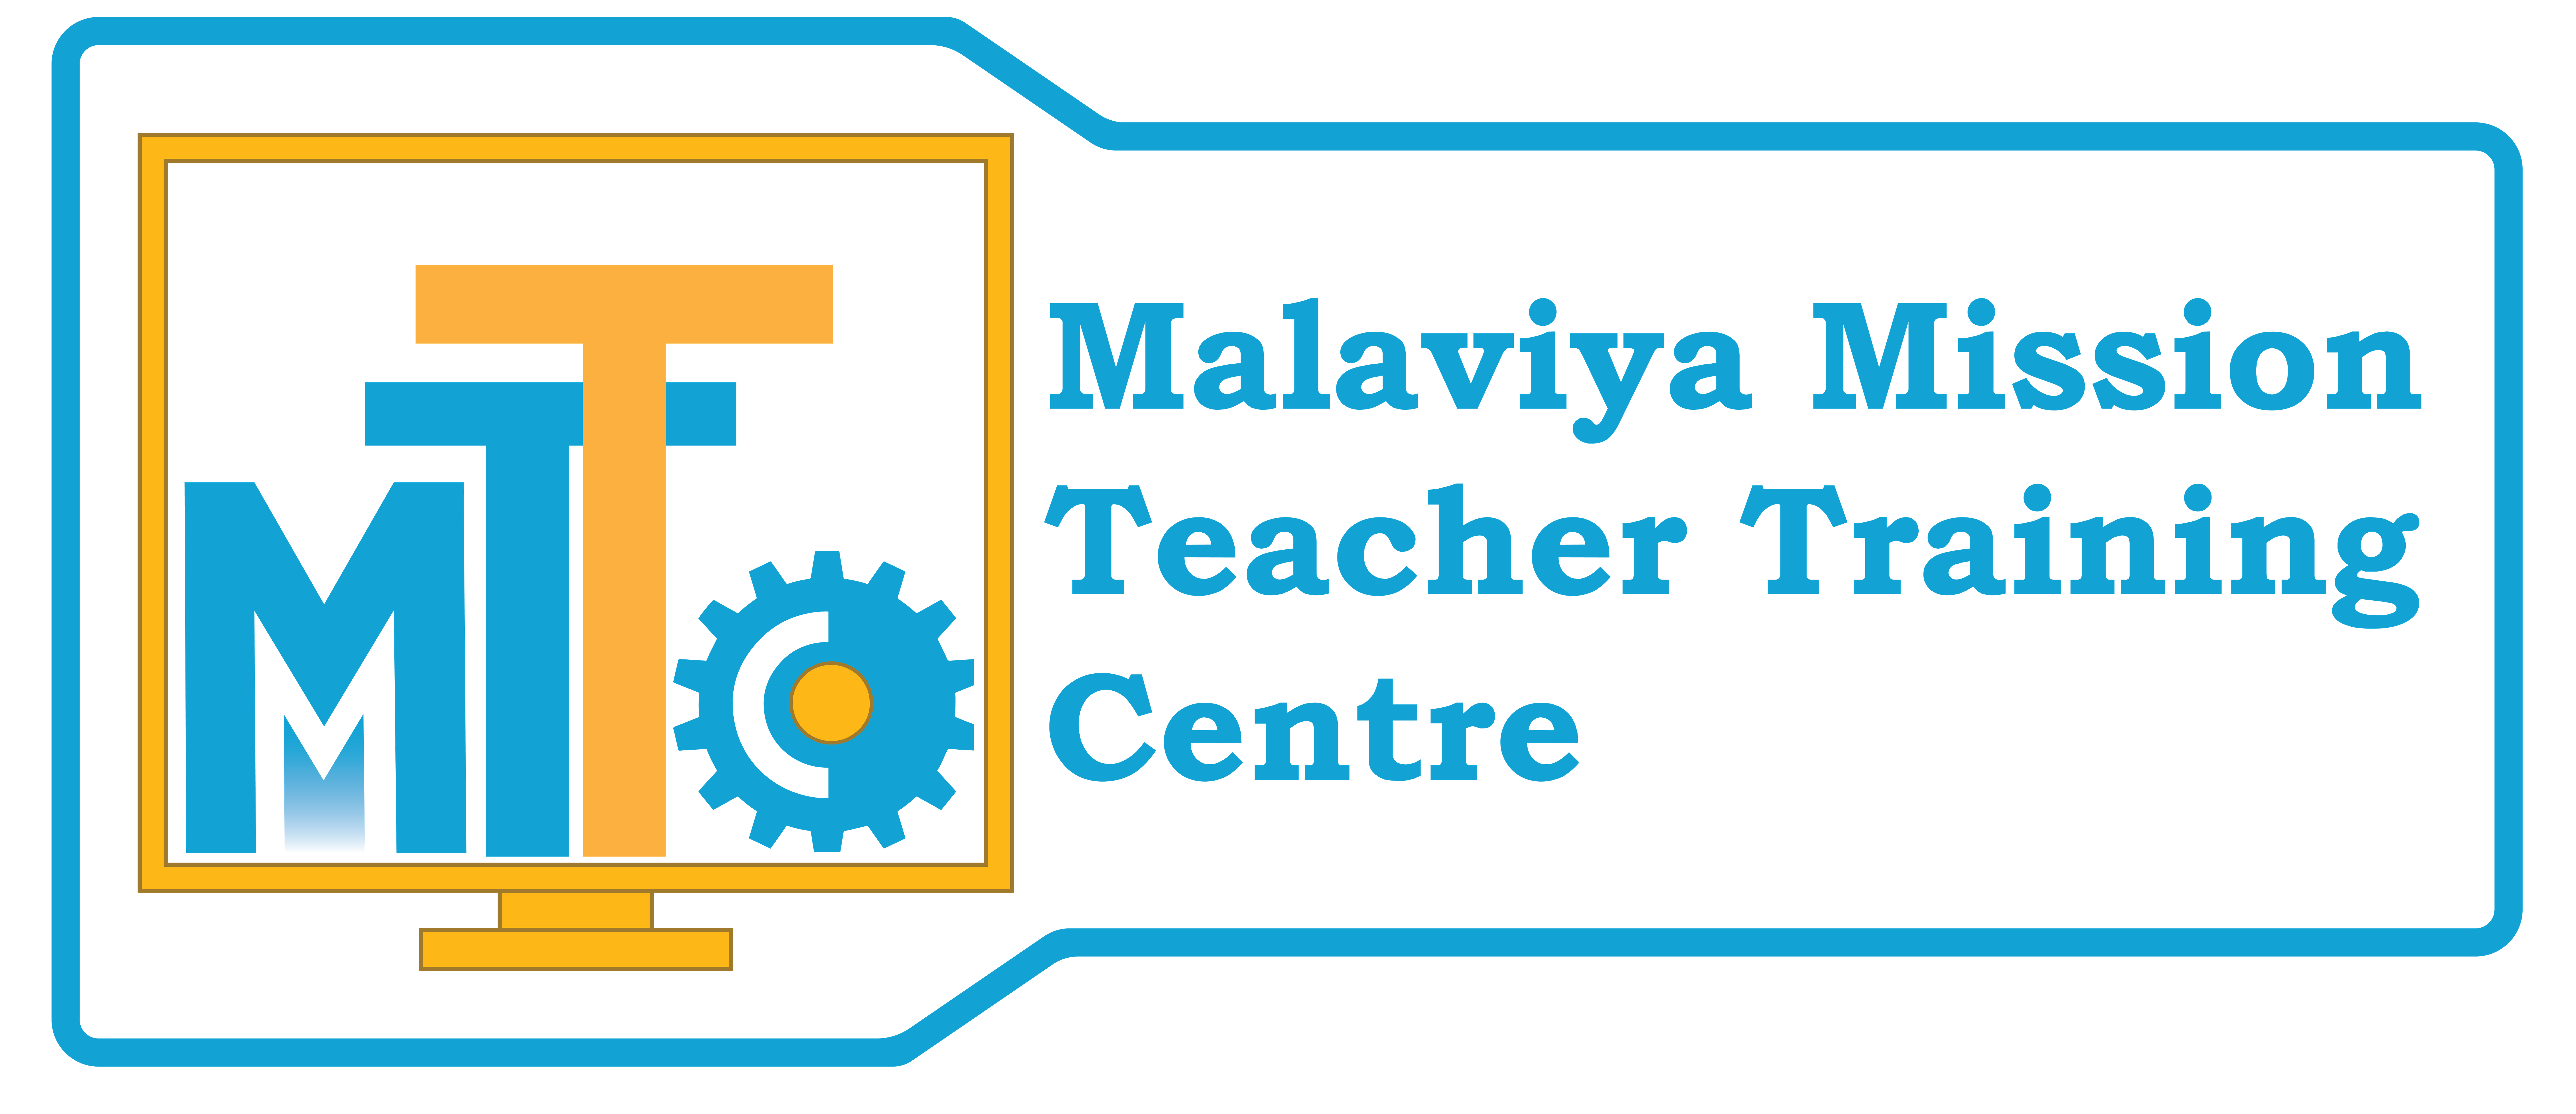 Malaviya Mission Teacher Training Center